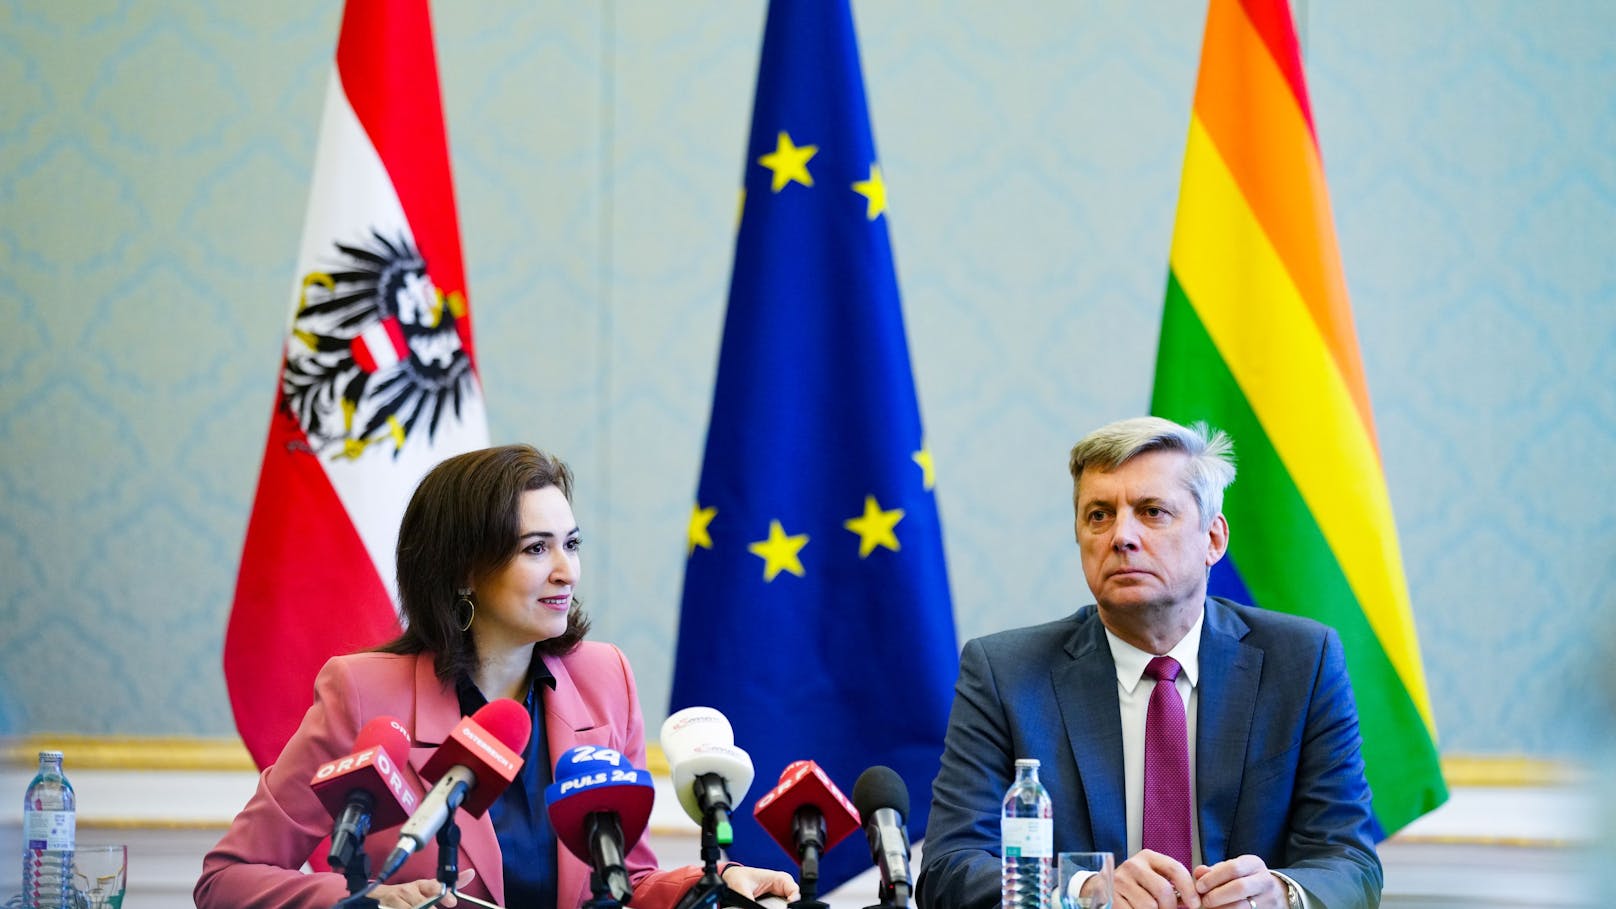 Pilnacek-Affäre: Zadic stellt Leiter der Kommission vor